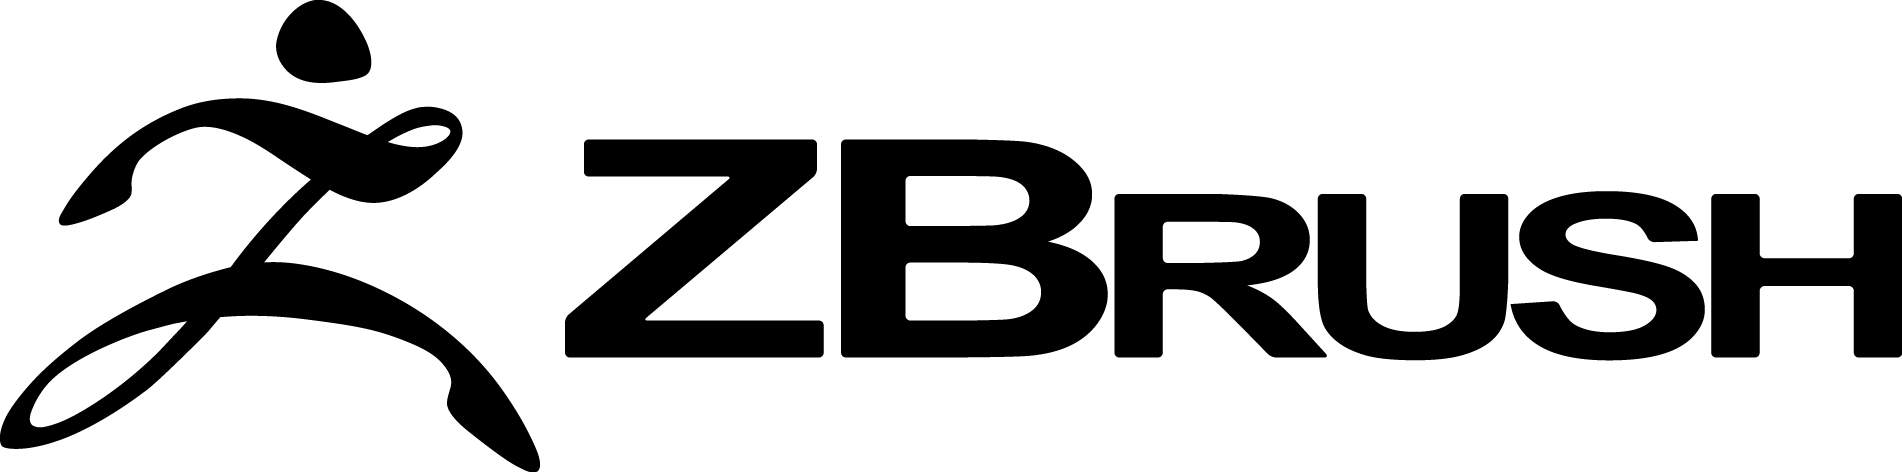 zbrush logo vector